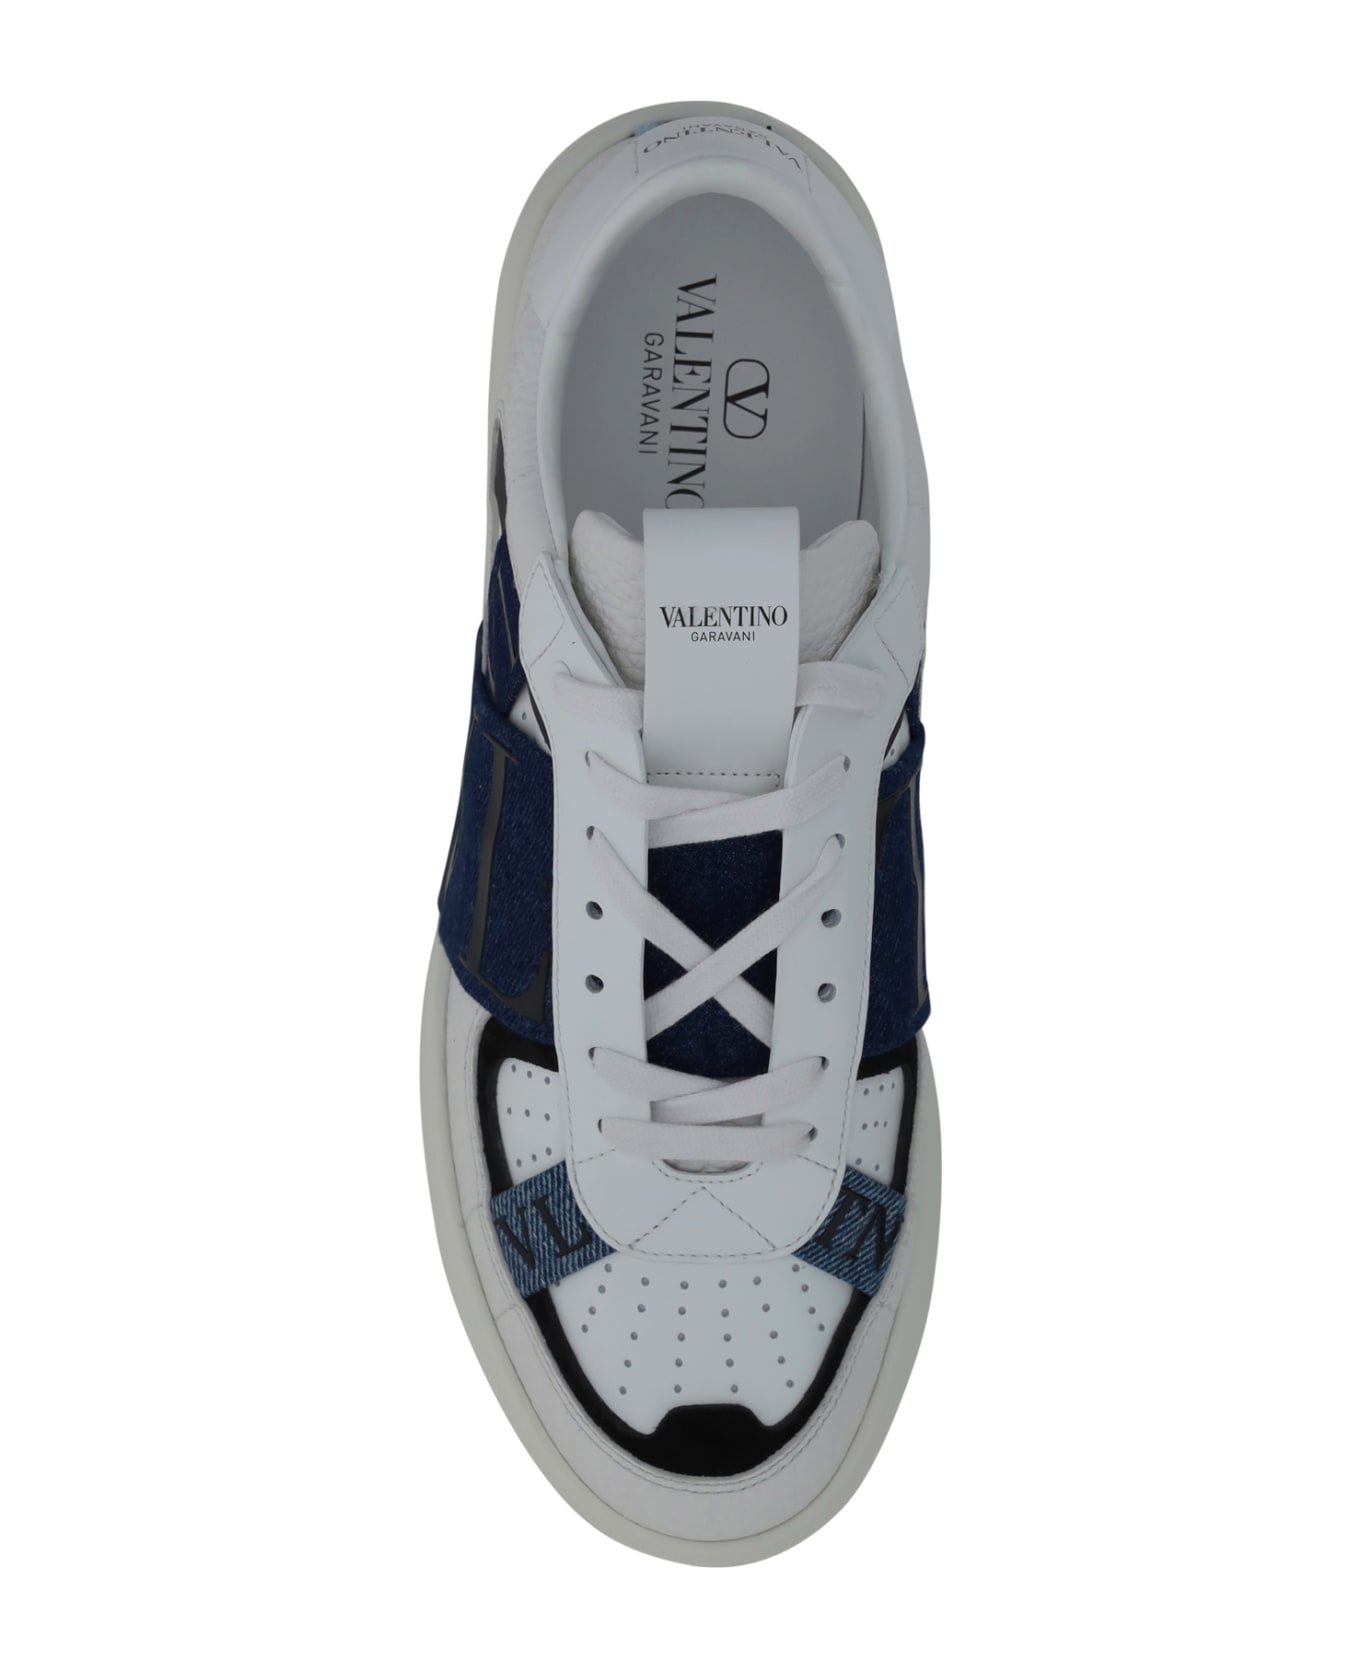 Valentino Garavani Vl7n Sneakers - Bianco/d.scuro-d.chiar/bi/ne スニーカー